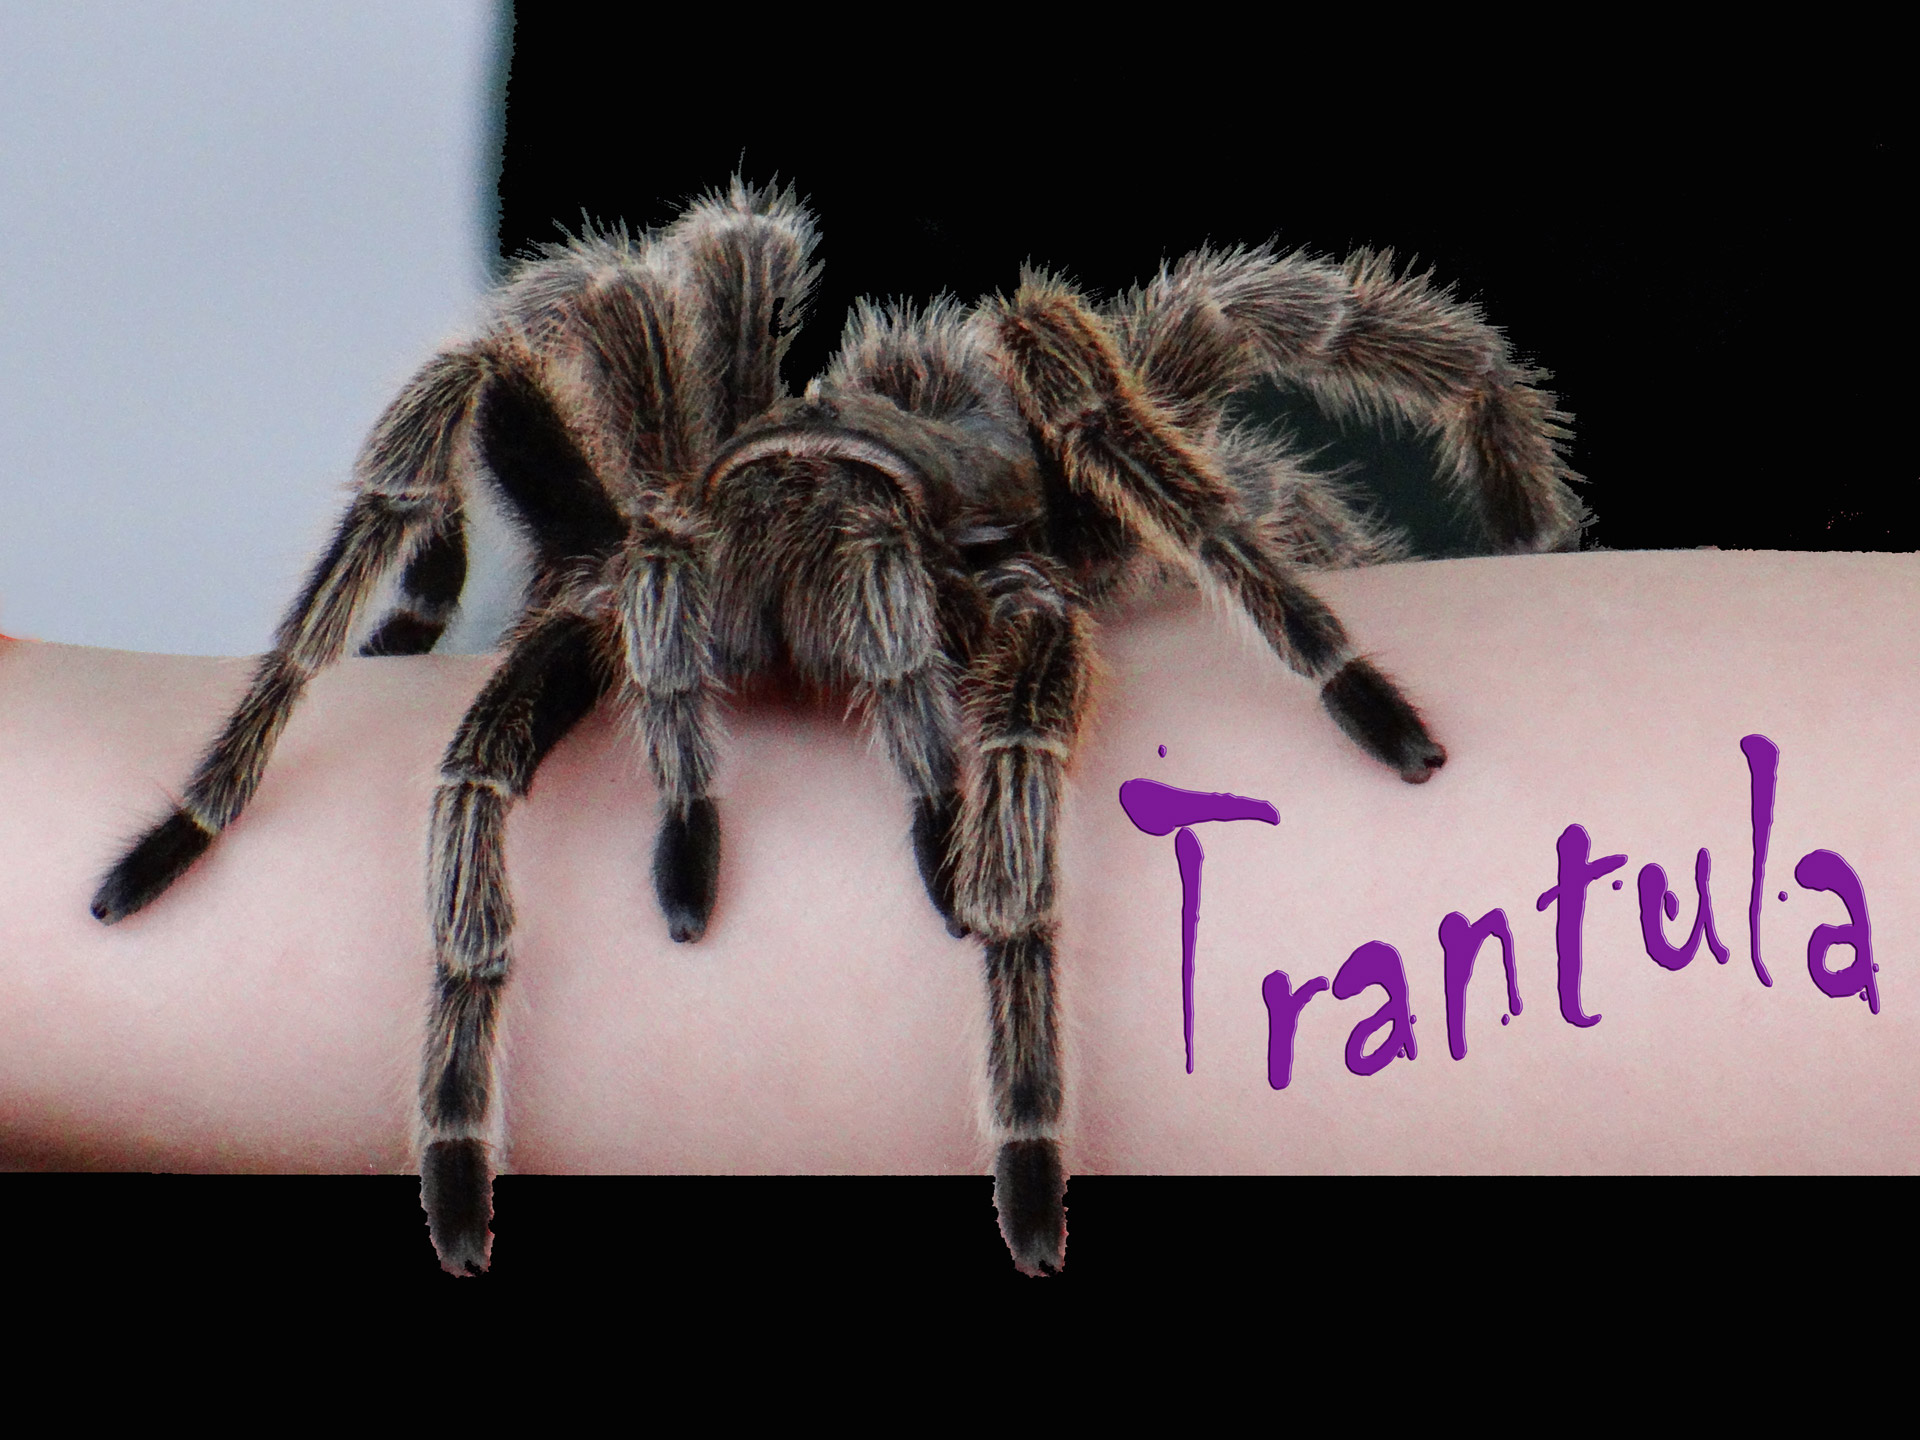 tarantula crawling arm free photo